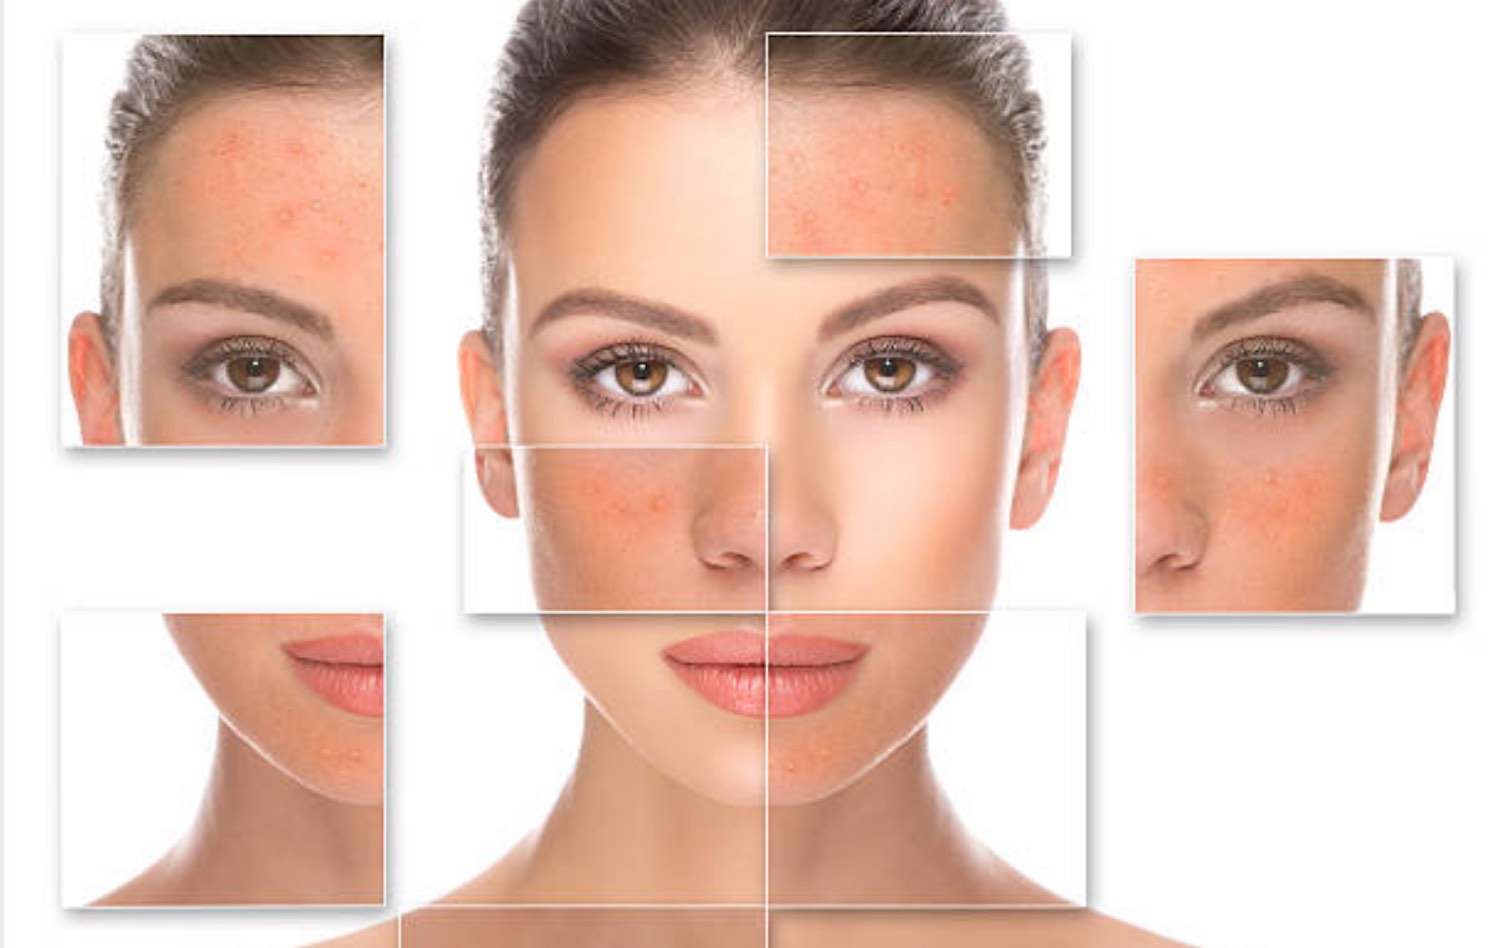 oily and acne-prone skin